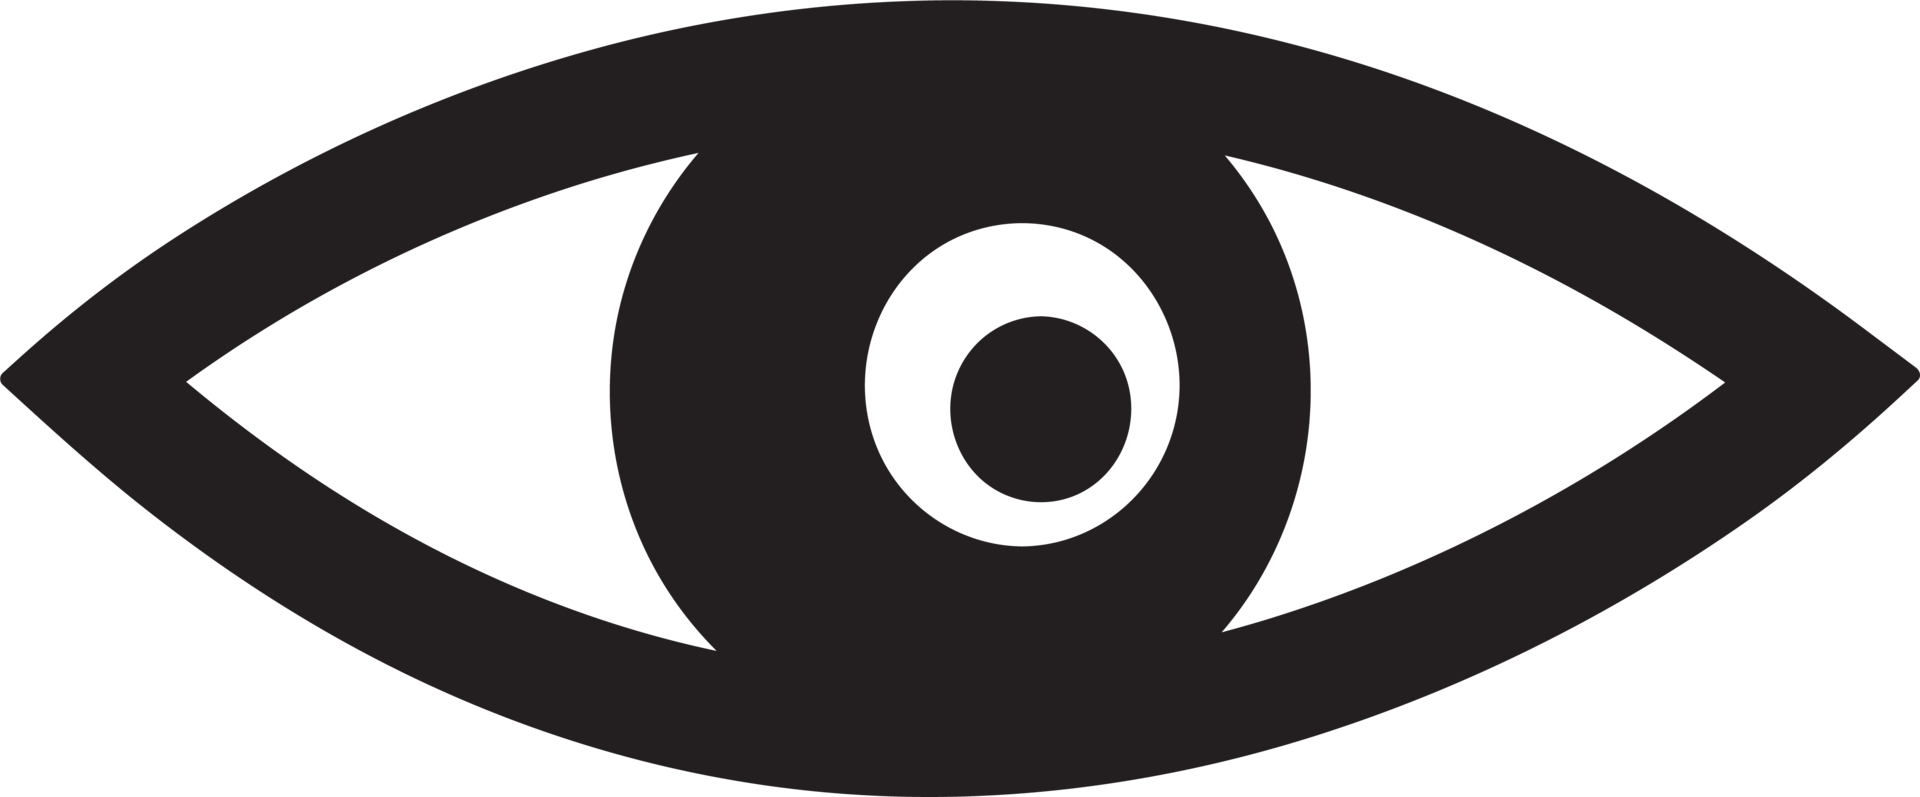 Eye Icon sign symbol design png